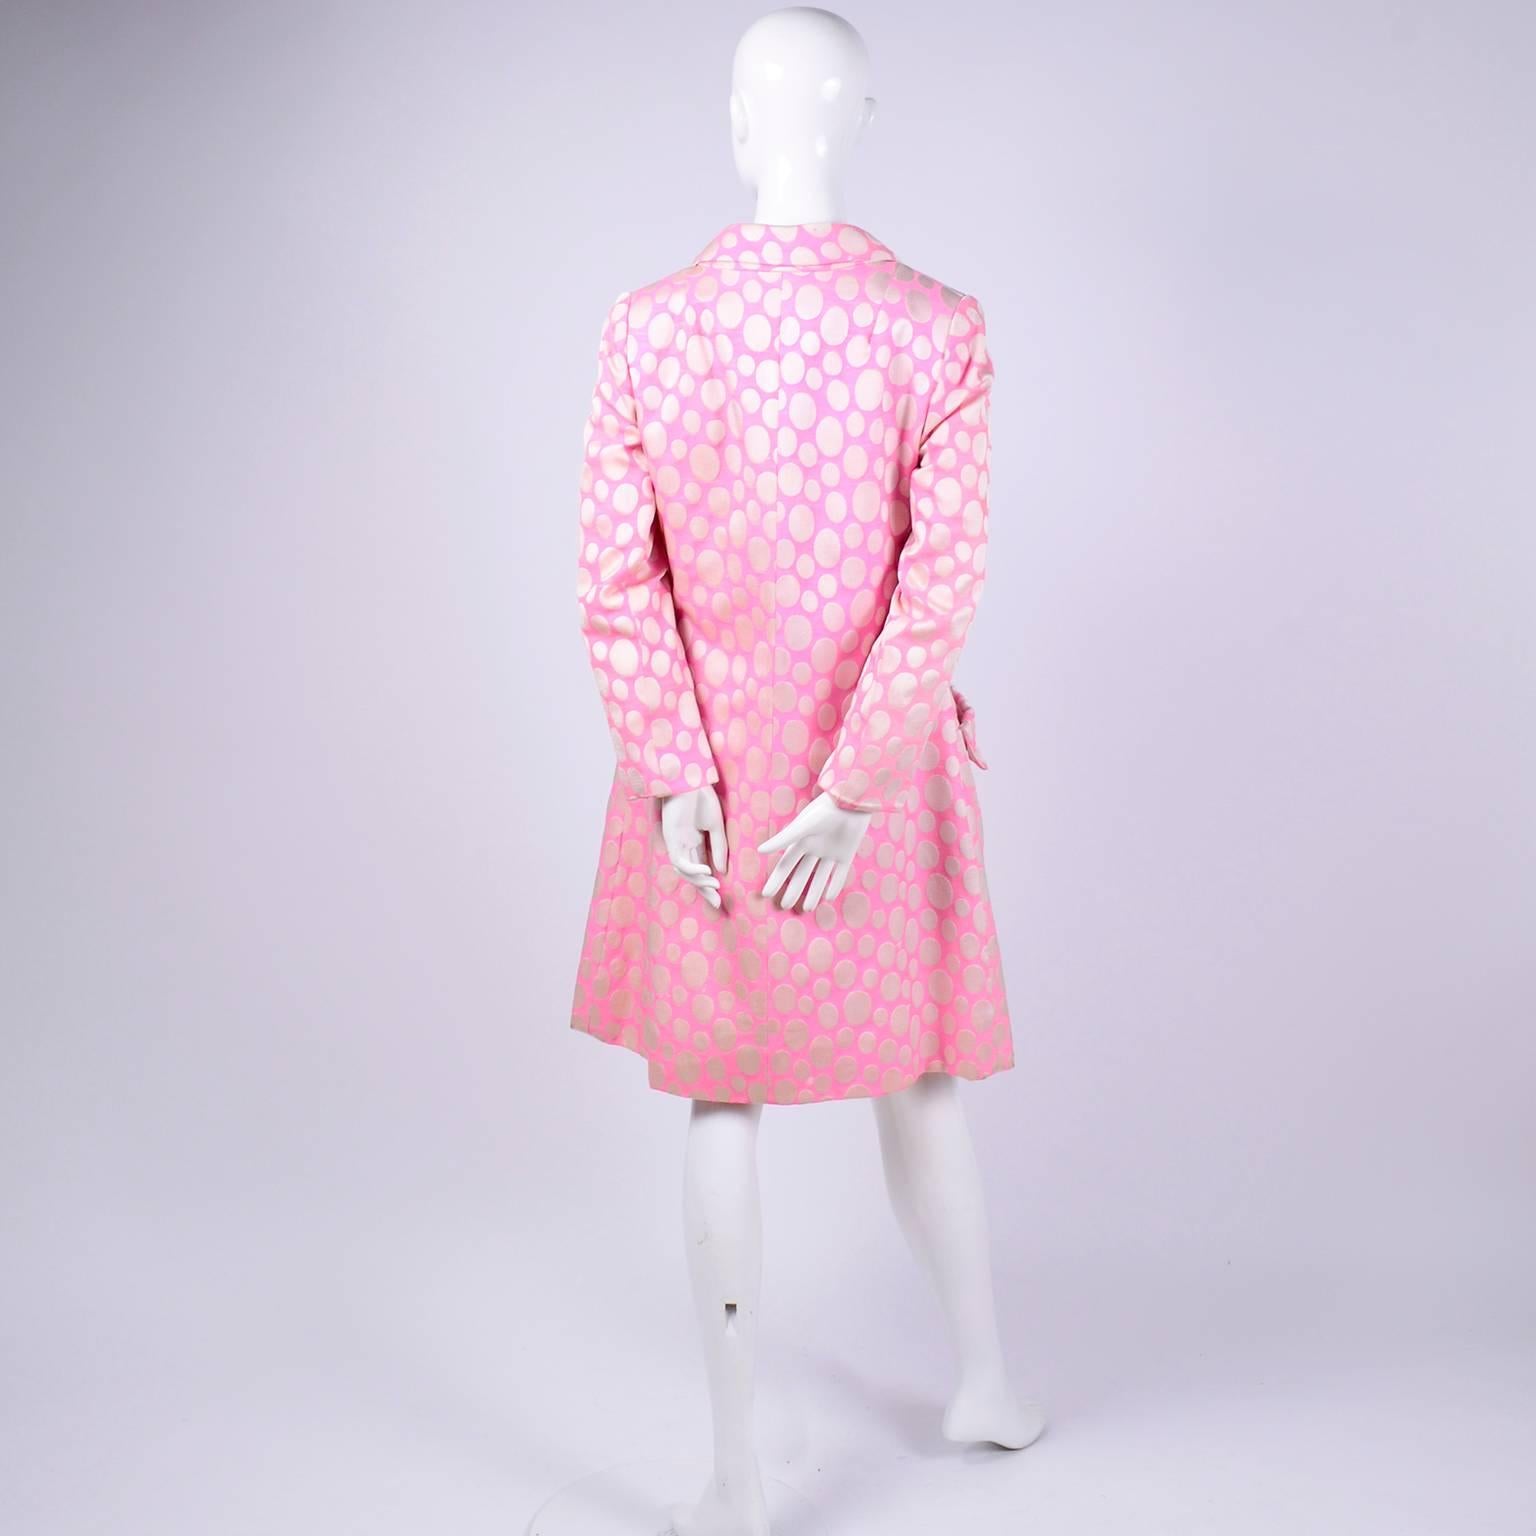 hot pink polka dot dress